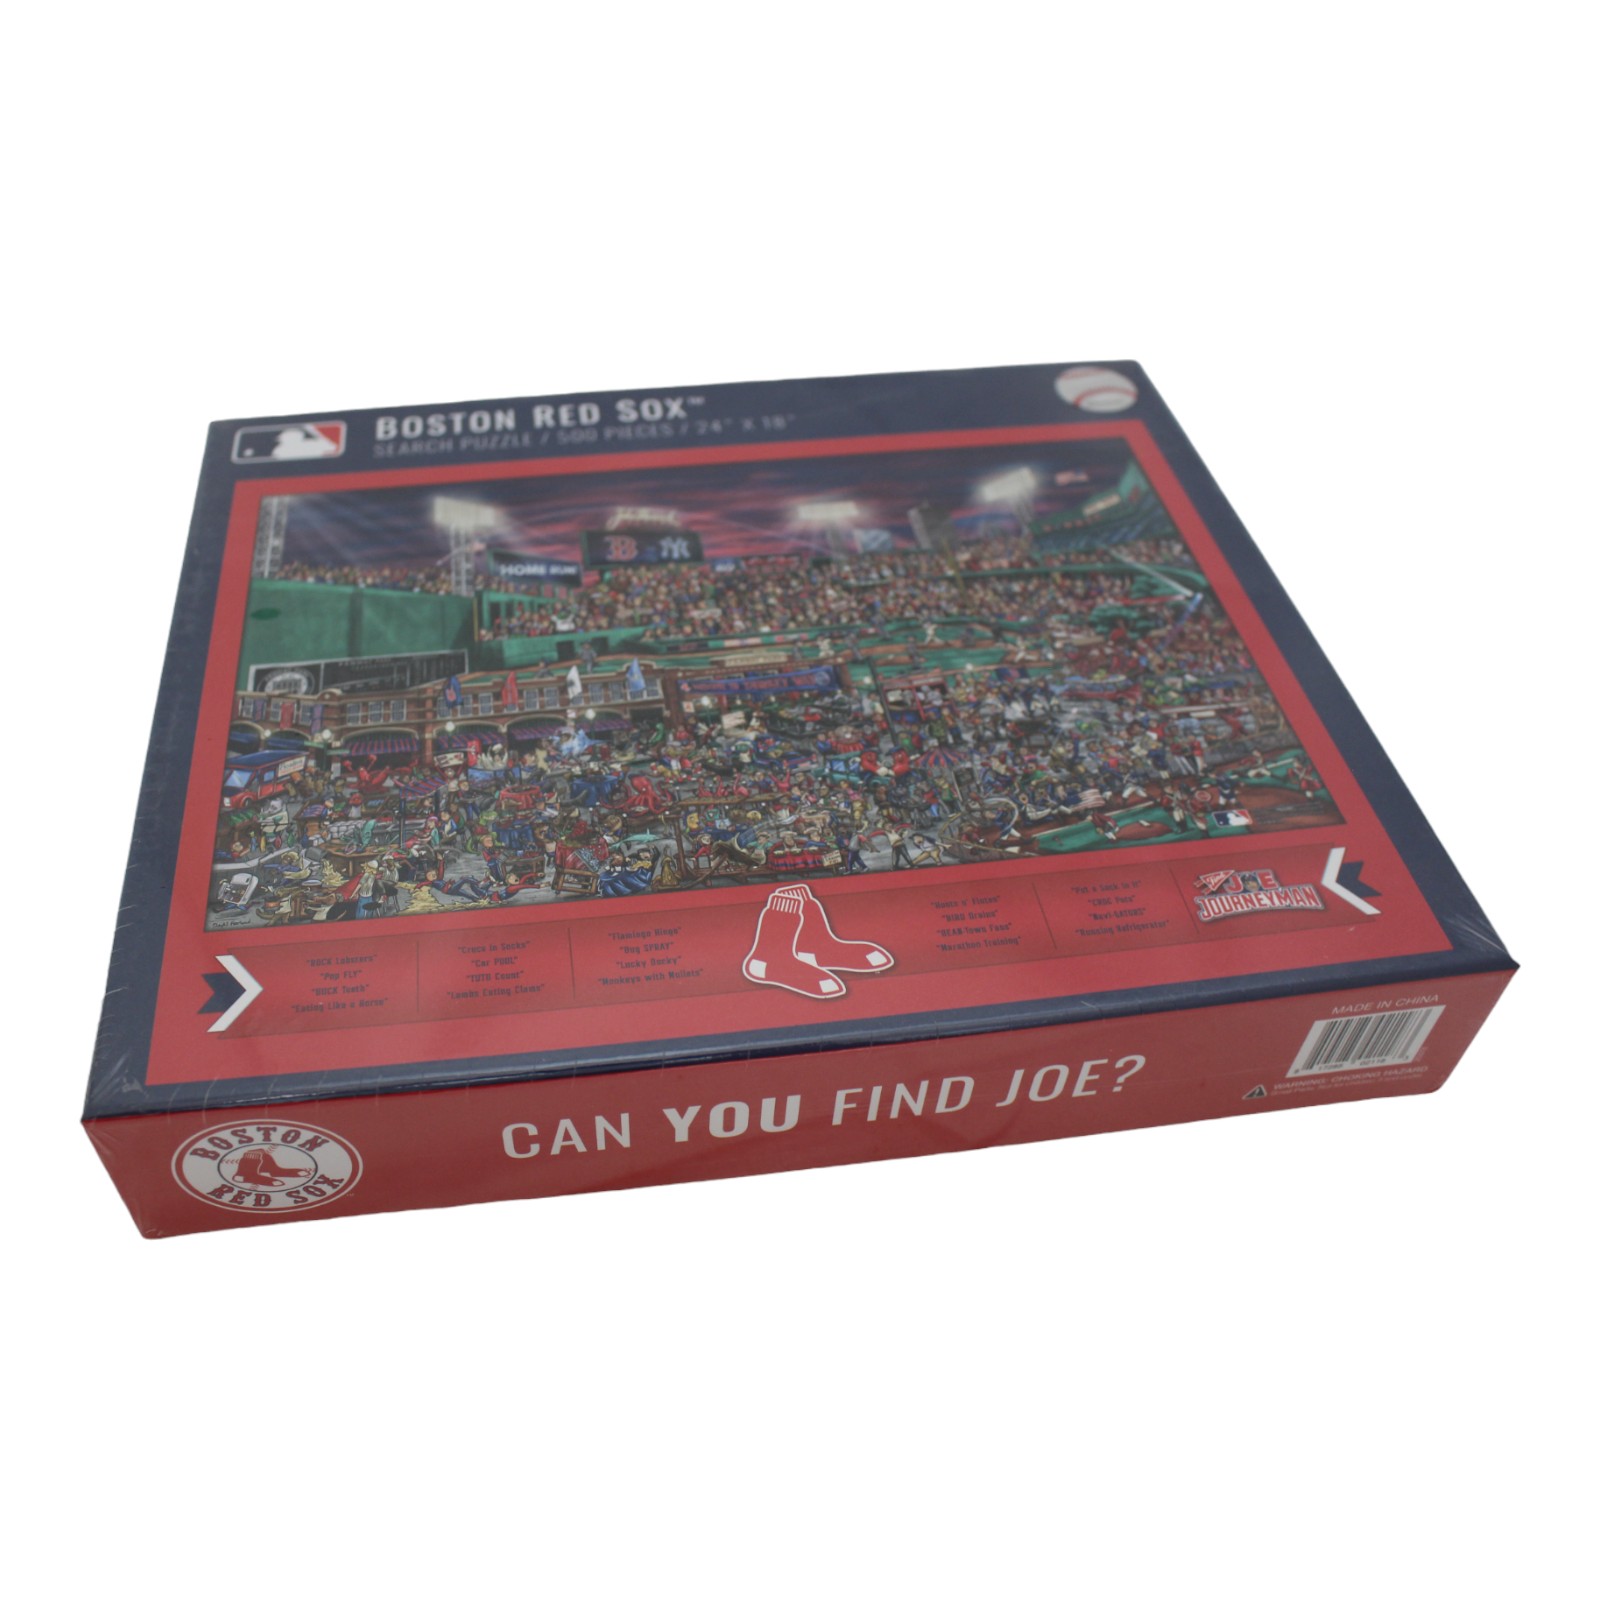 Boston Red Sox 18"x24" YouTheFan 500 Piece Joe Journeyman Puzzle